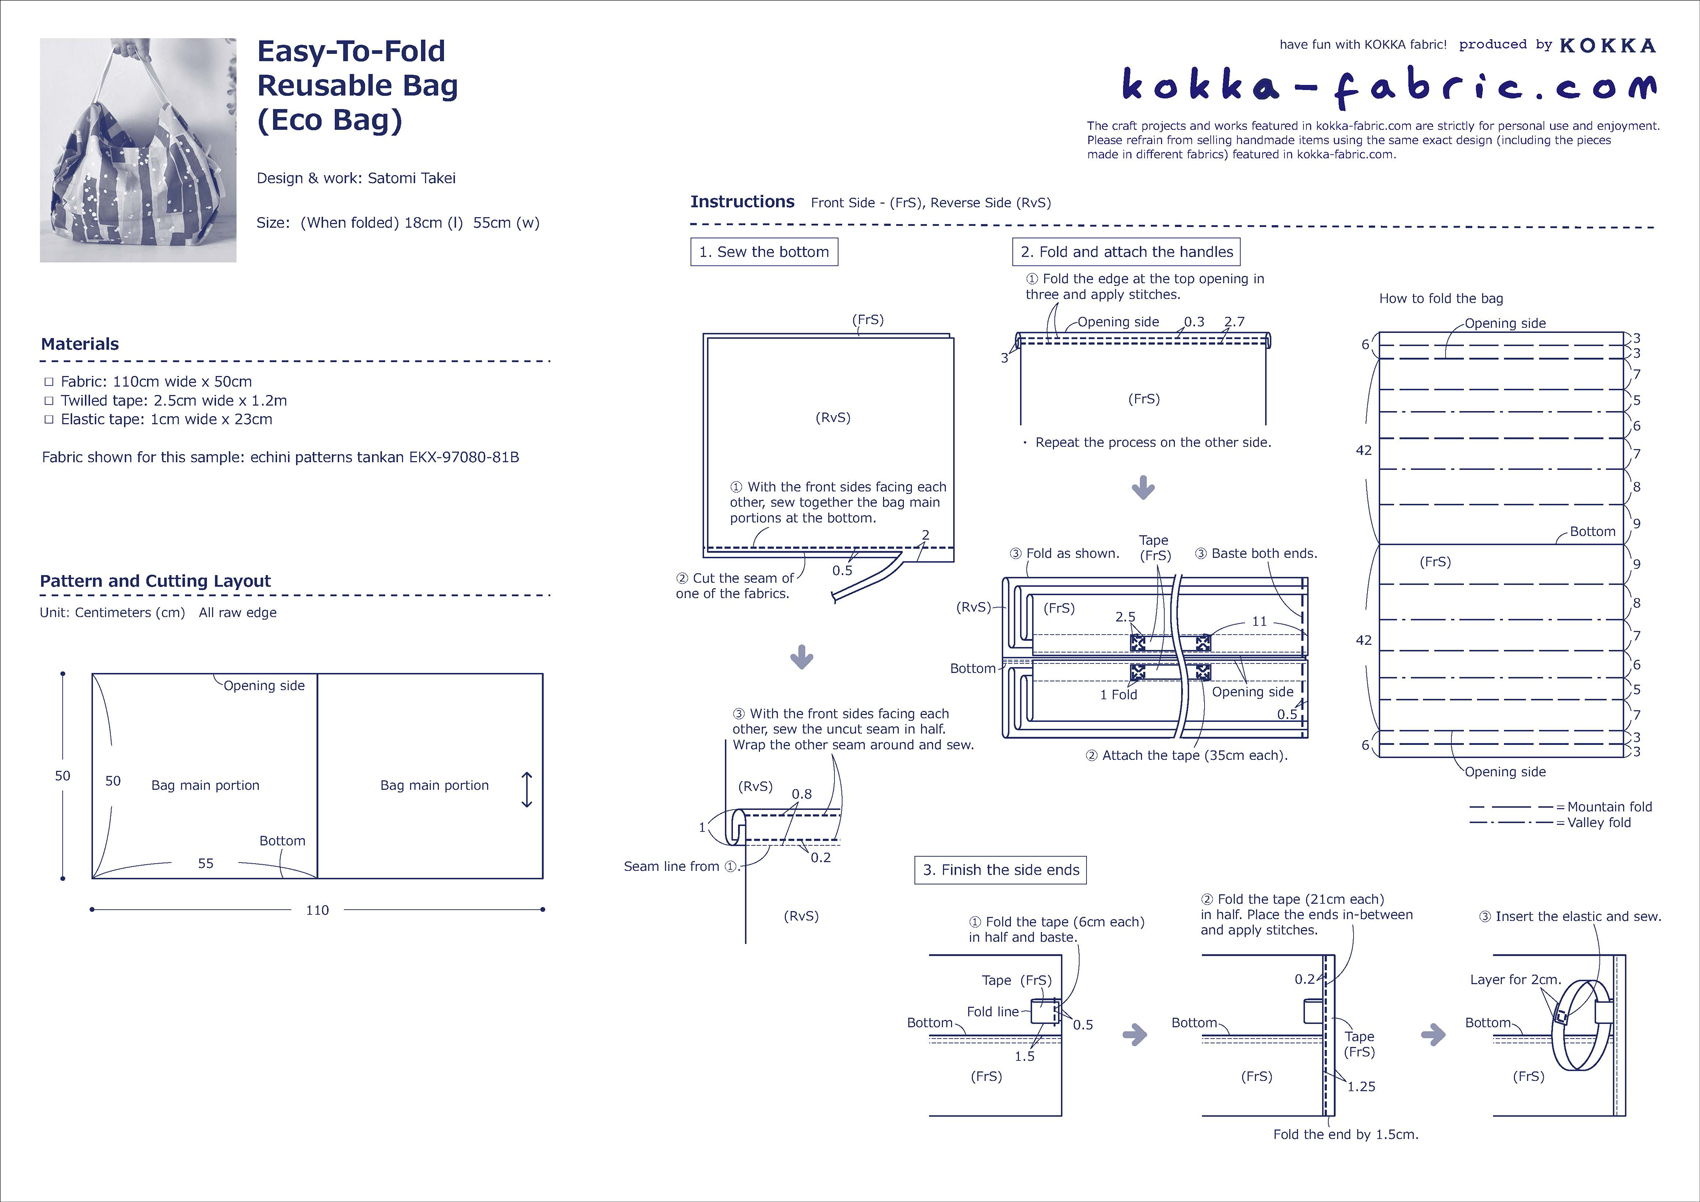 Easy-To-Fold Reusable Bag – Sewing Instructions | KOKKA-FABRIC.COM ...